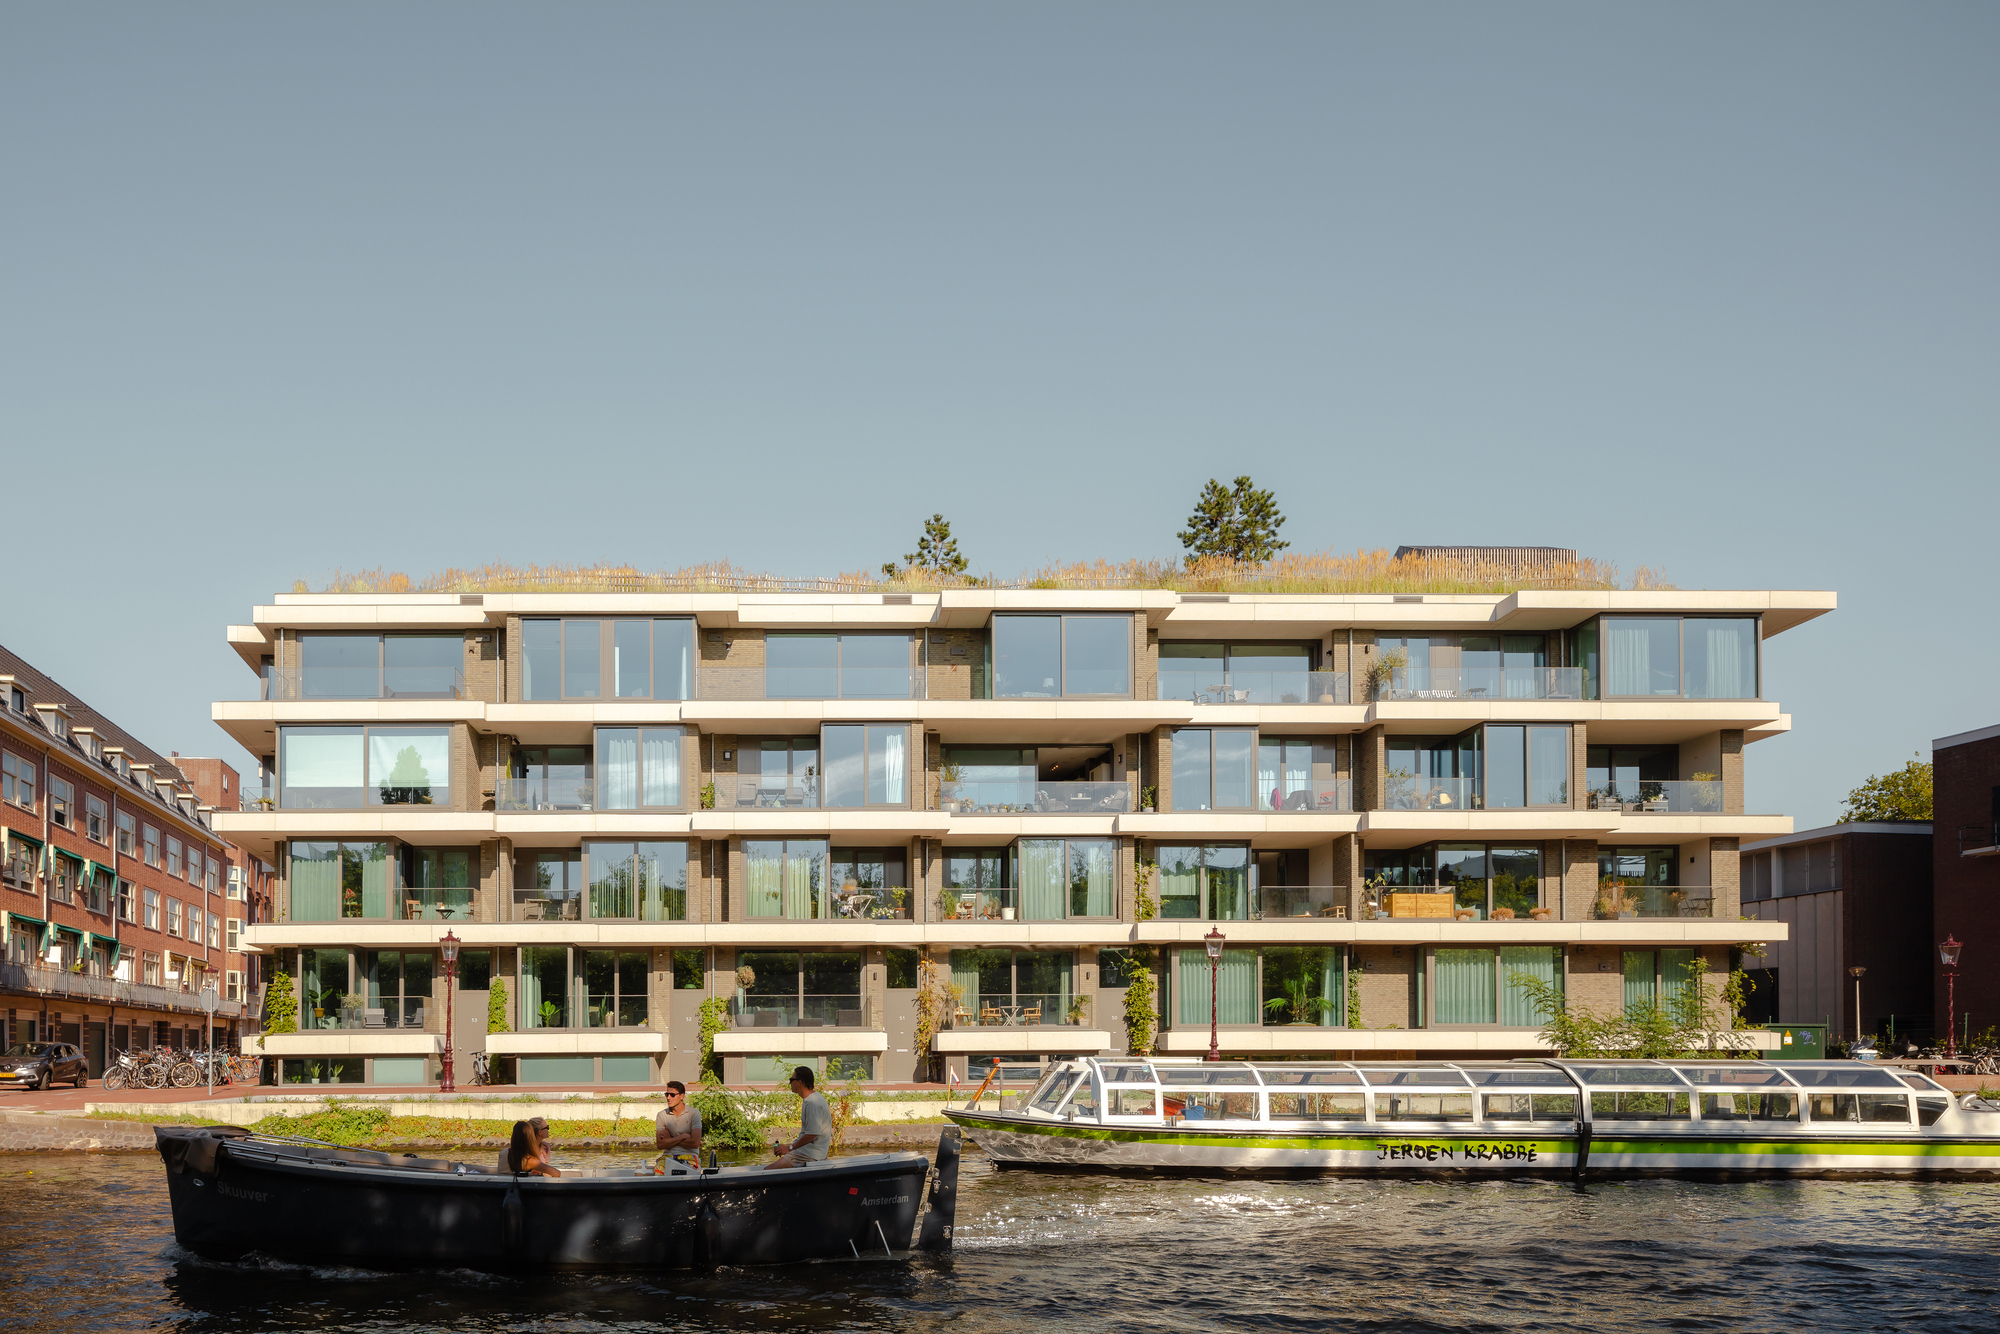 Groenmarkt Housing / Ronald Janssen Architecten + Bastiaan Jongerius Architecten + Buro Harro